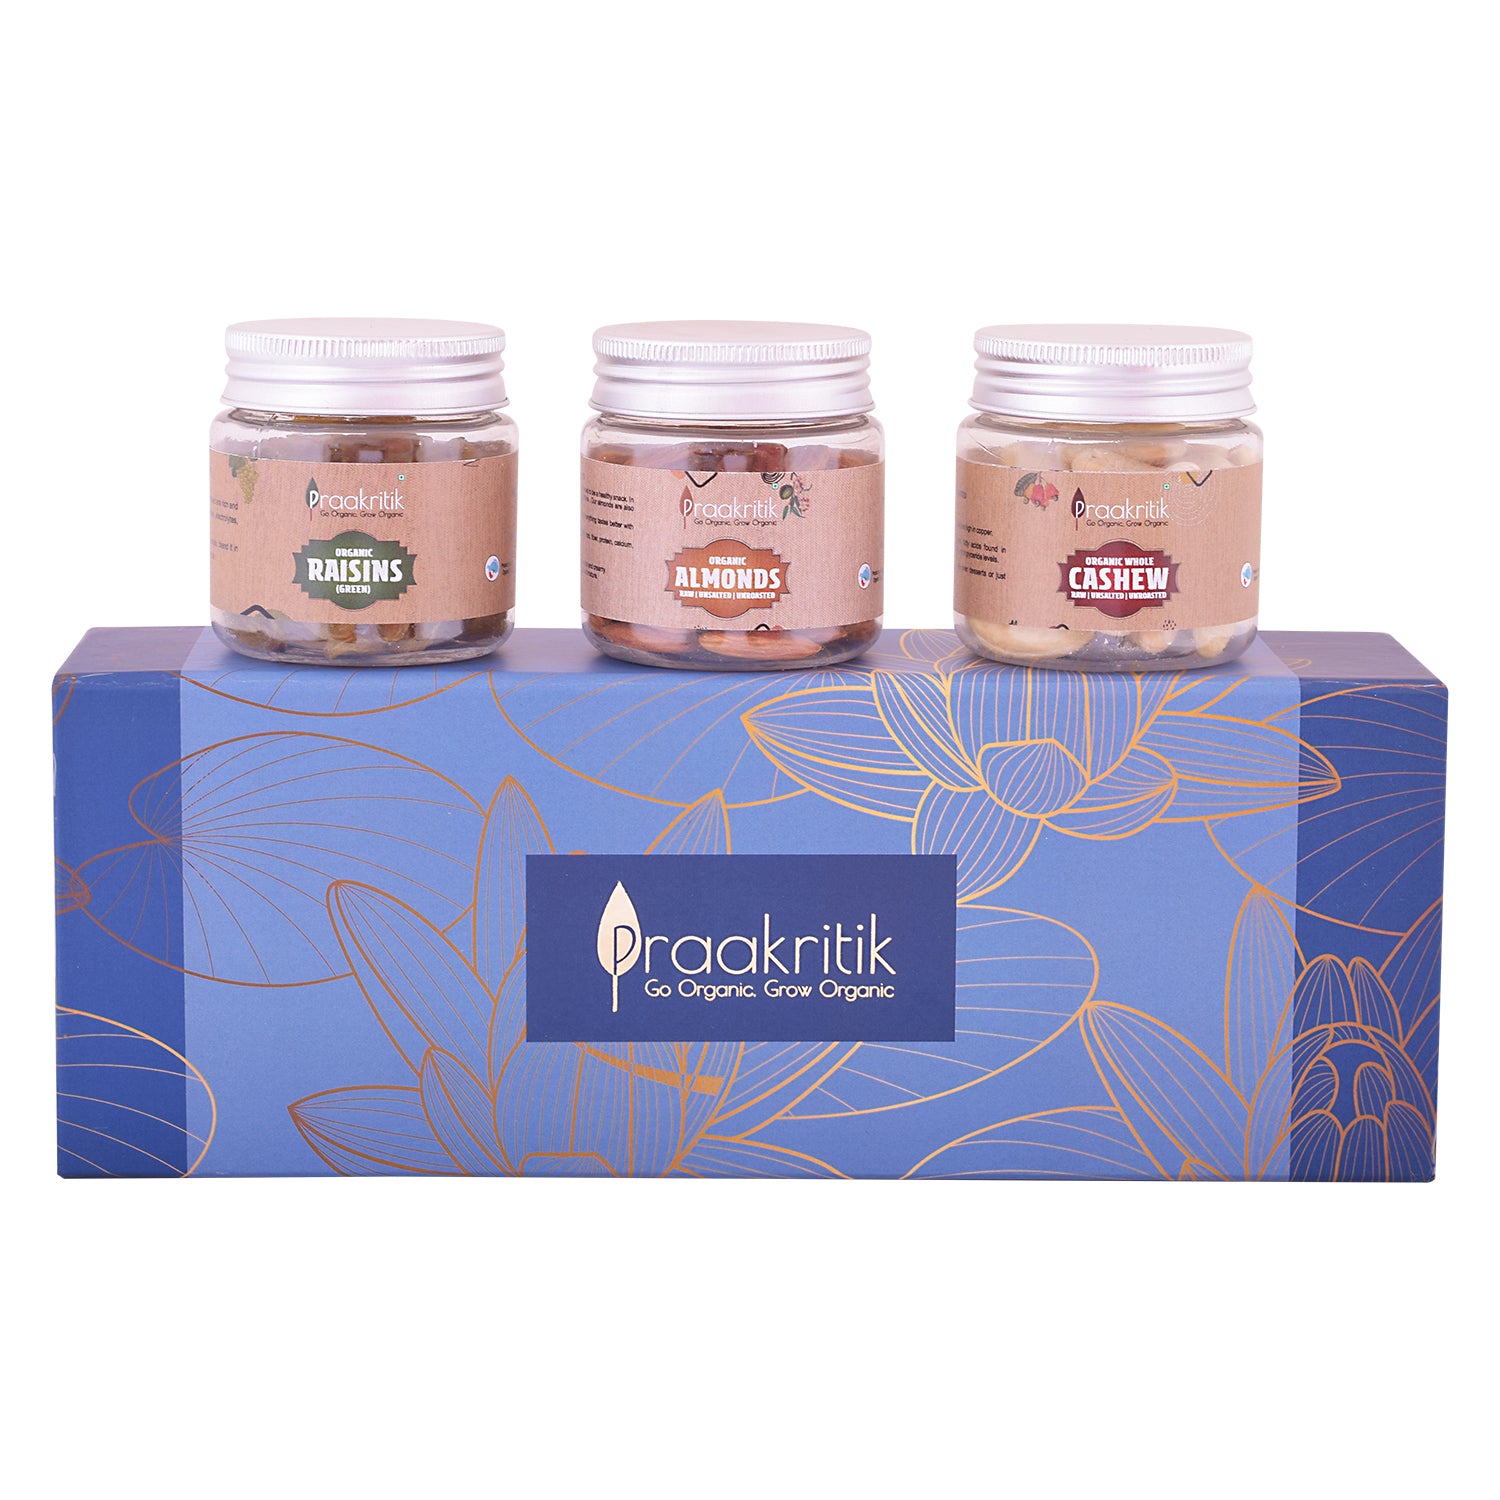 Praakritik Organic Festive Dry Fruit Premium Collection - Almonds, Cashew , Green Raisins